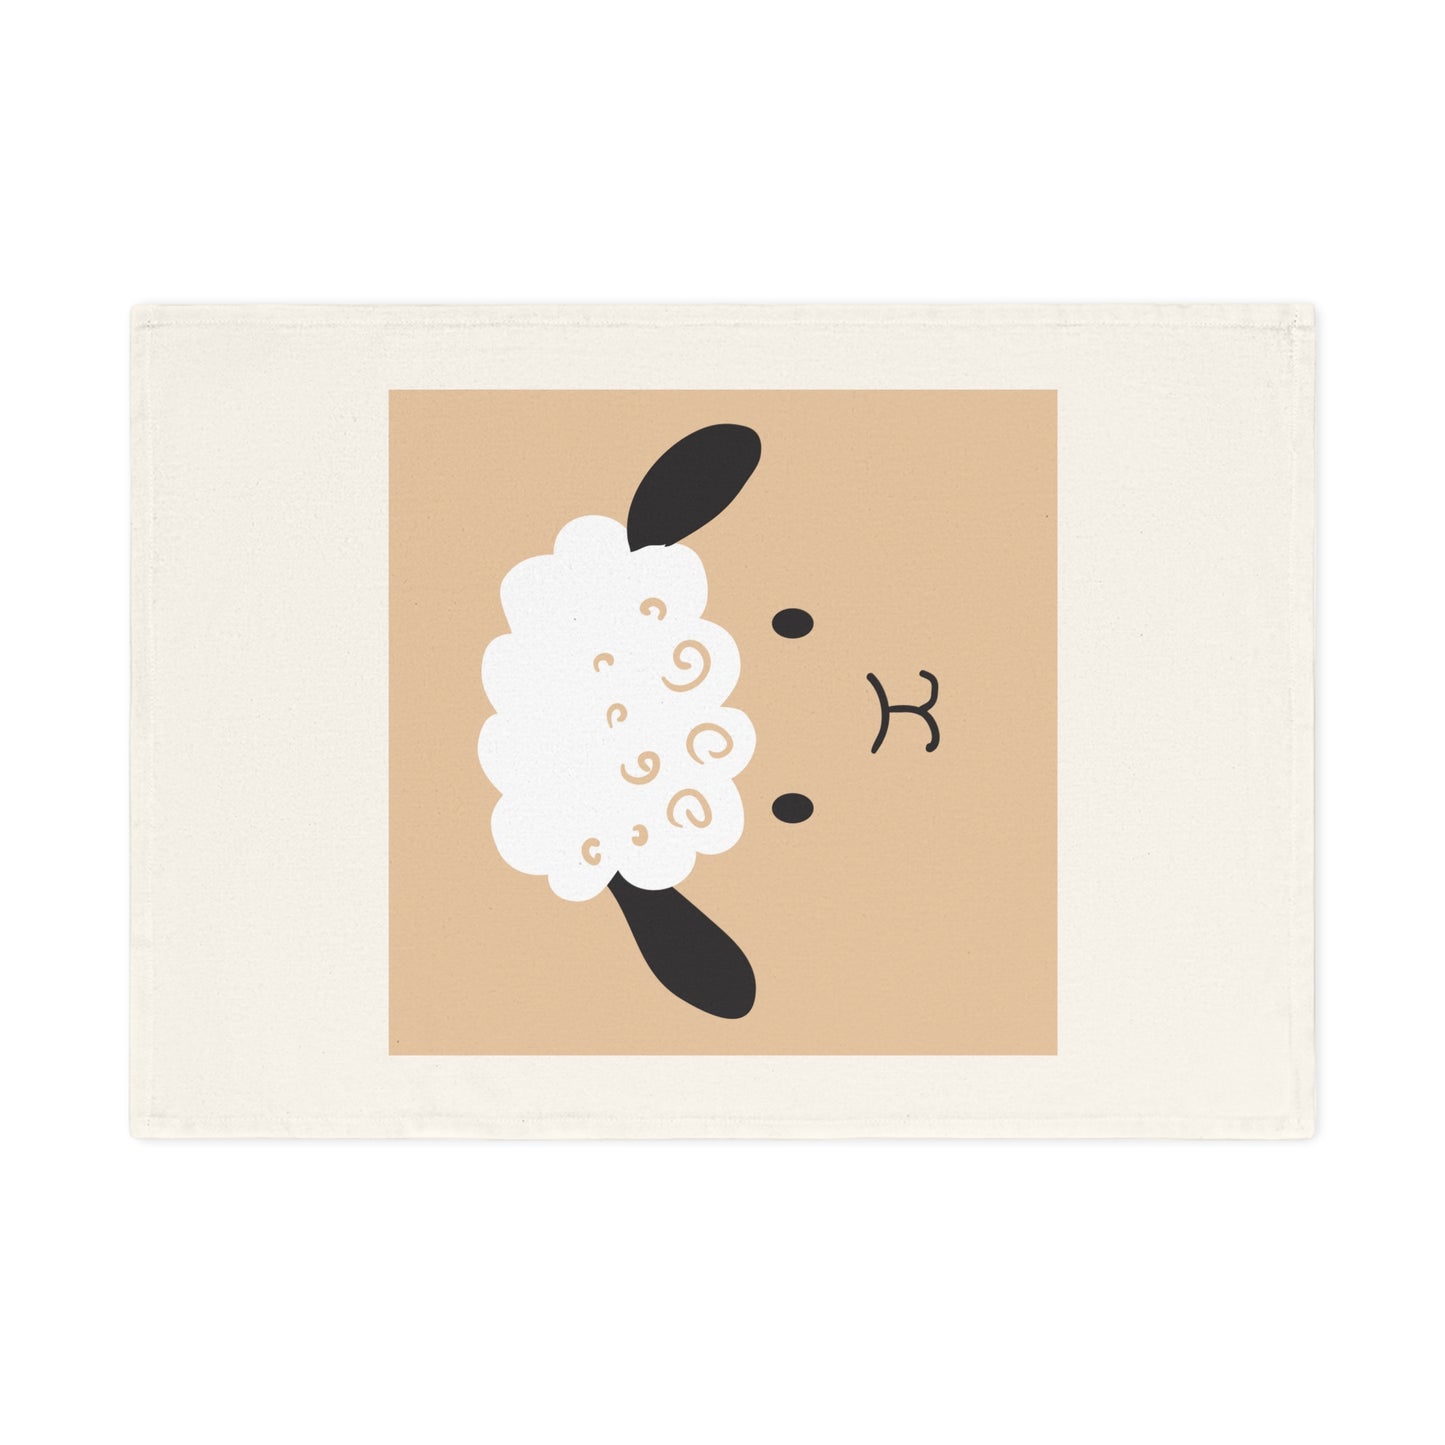 Sheep Relationsheep Organic Cotton Tea Towel, 50 x 70 cm, eco-friendly kitchen towel, bathroom hand towel